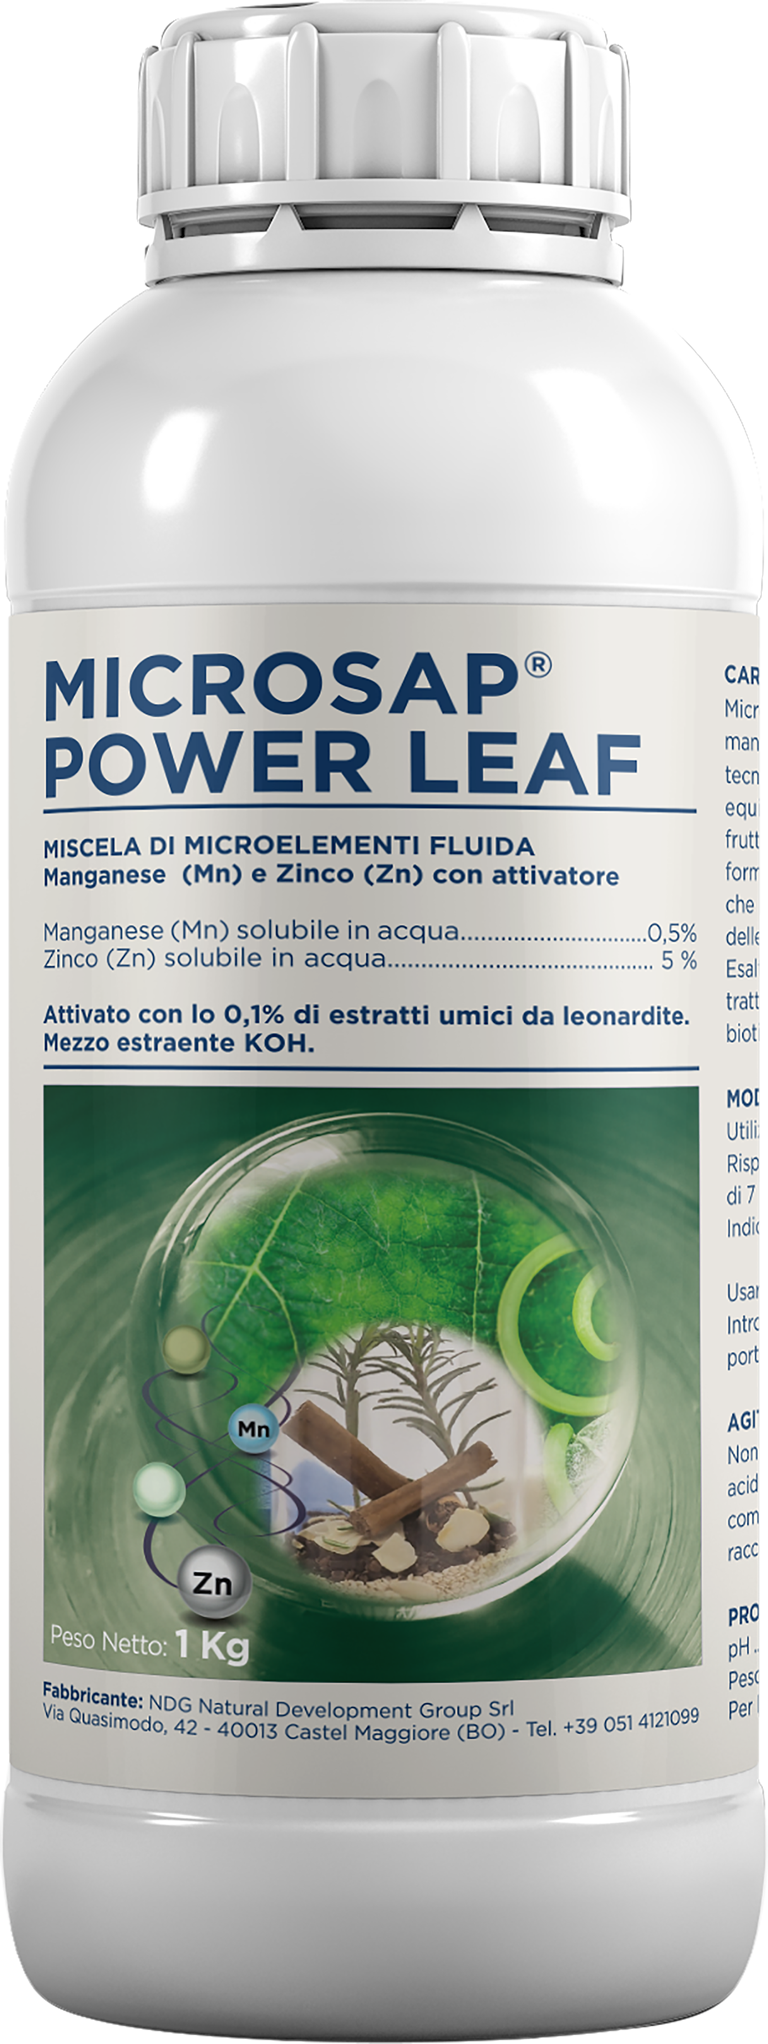 home_MicroSap-power-leaf-kg1